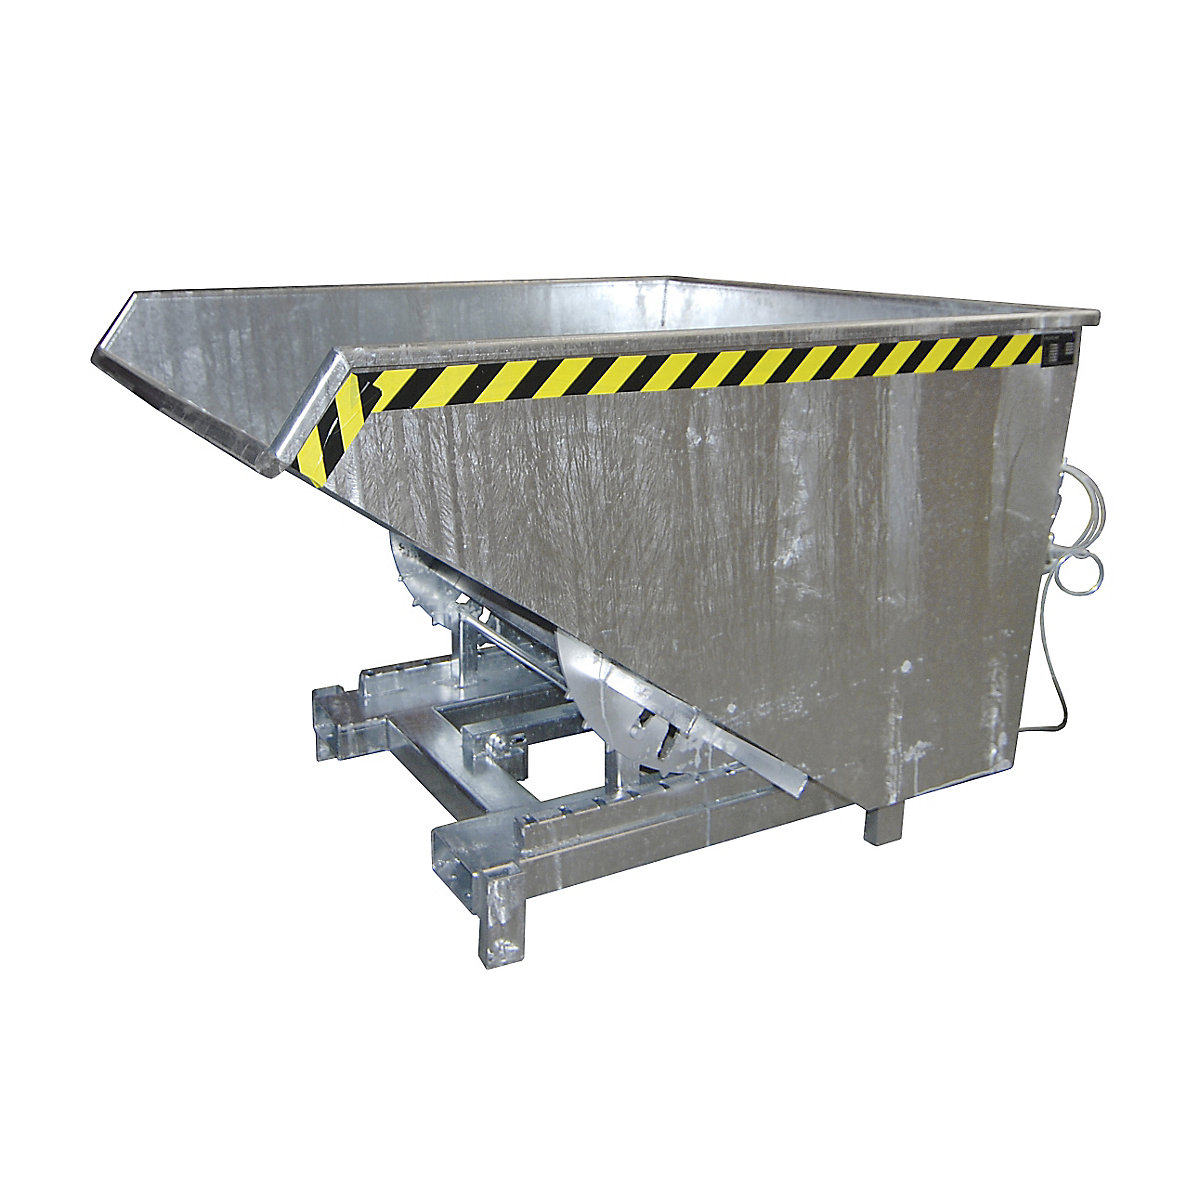 Heavy duty tilting skip – eurokraft pro, capacity 2.1 m³, max. load 4000 kg, hot dip galvanised in accordance with EN ISO 1461-7